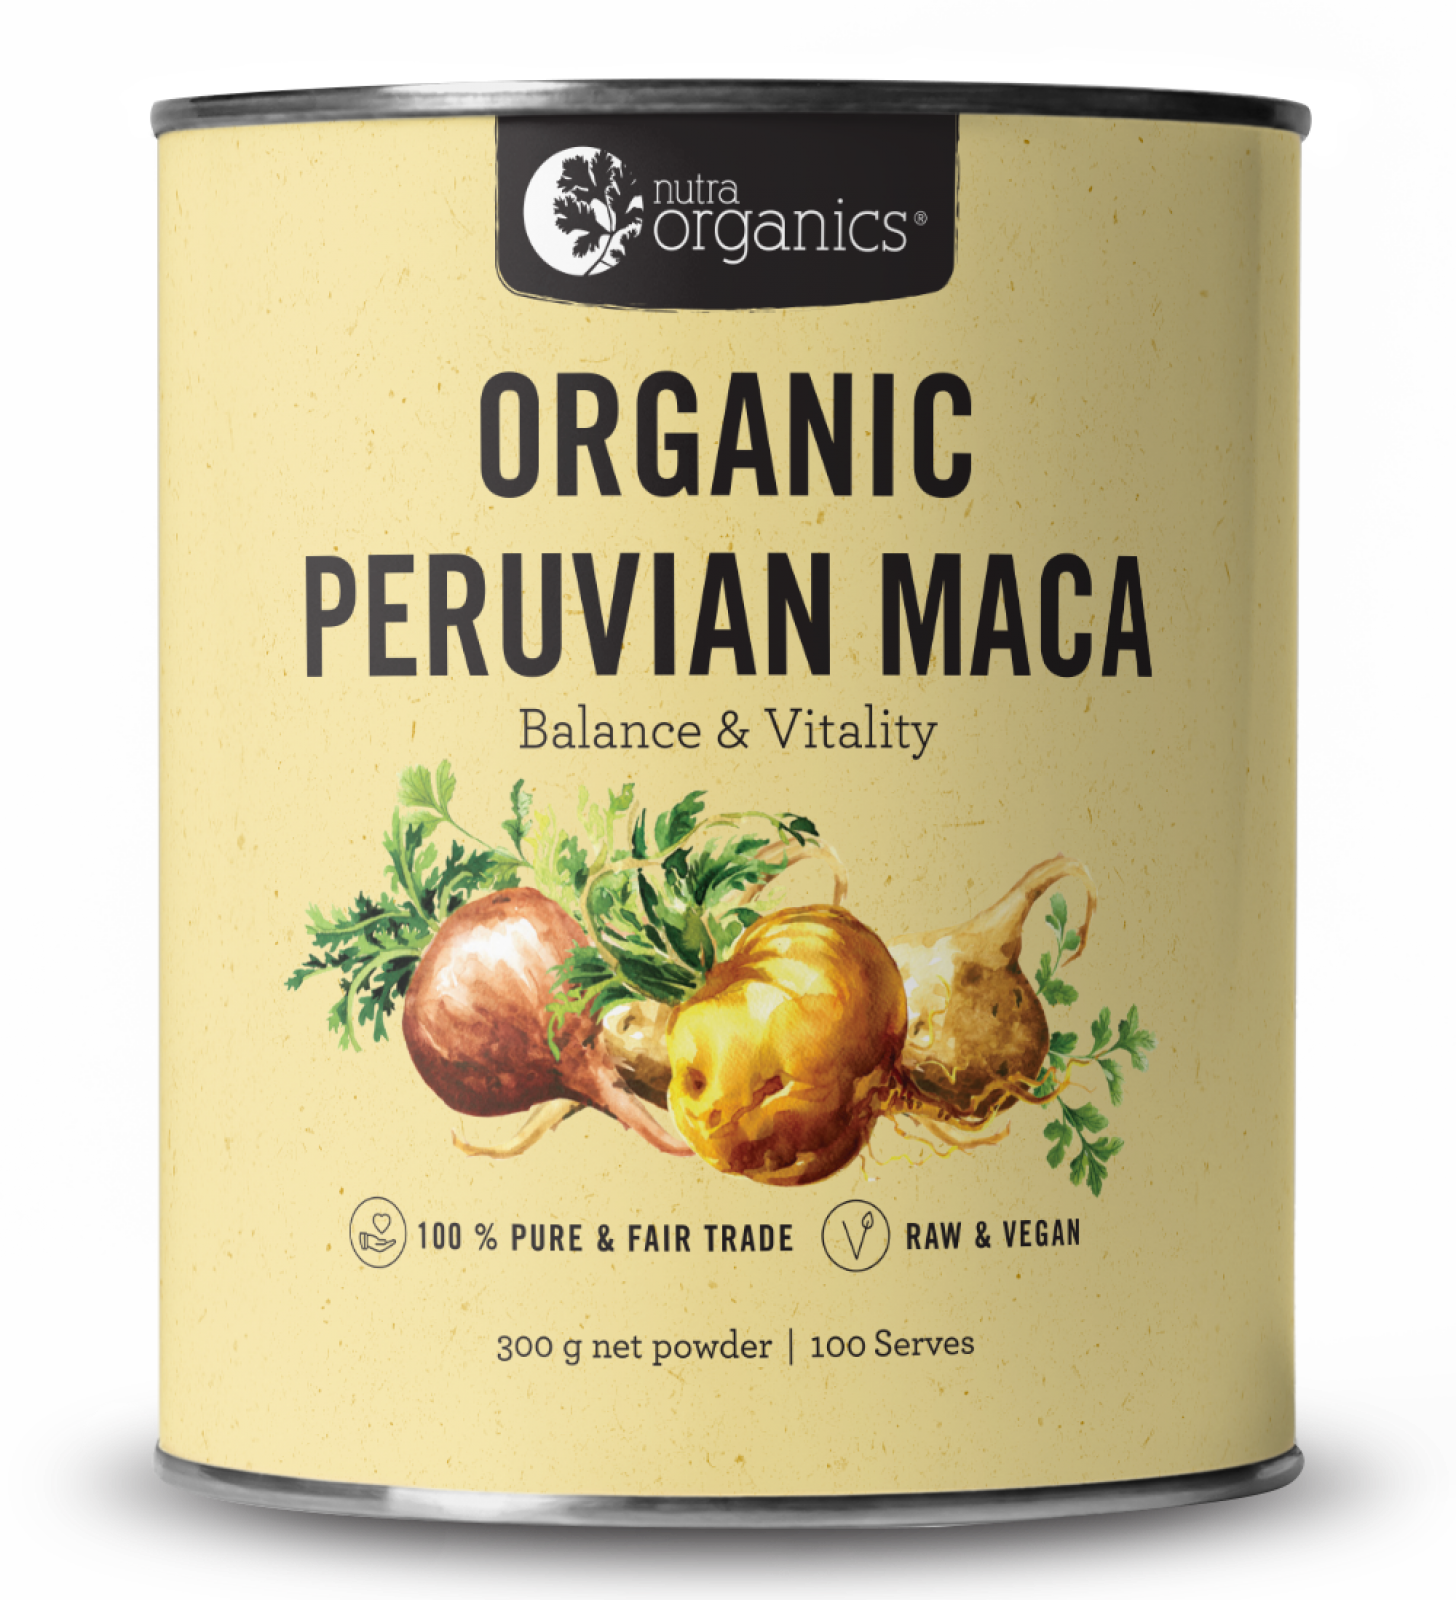 NUTRA ORGANICS Organic Peruvian Maca 300g